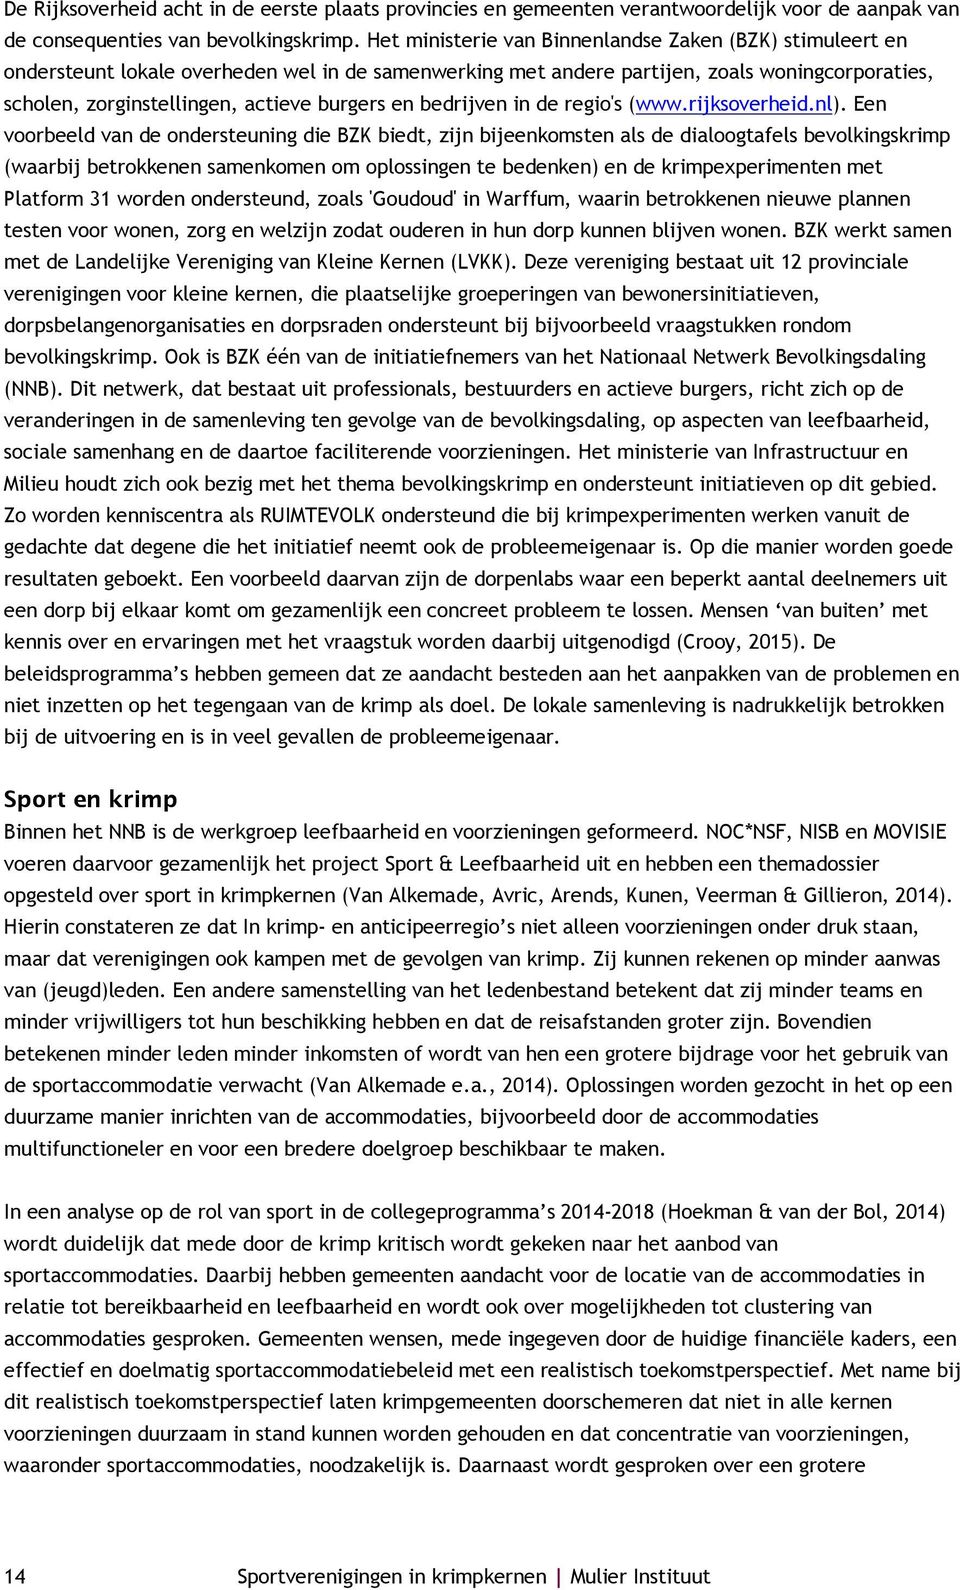 en bedrijven in de regio's (www.rijksoverheid.nl).